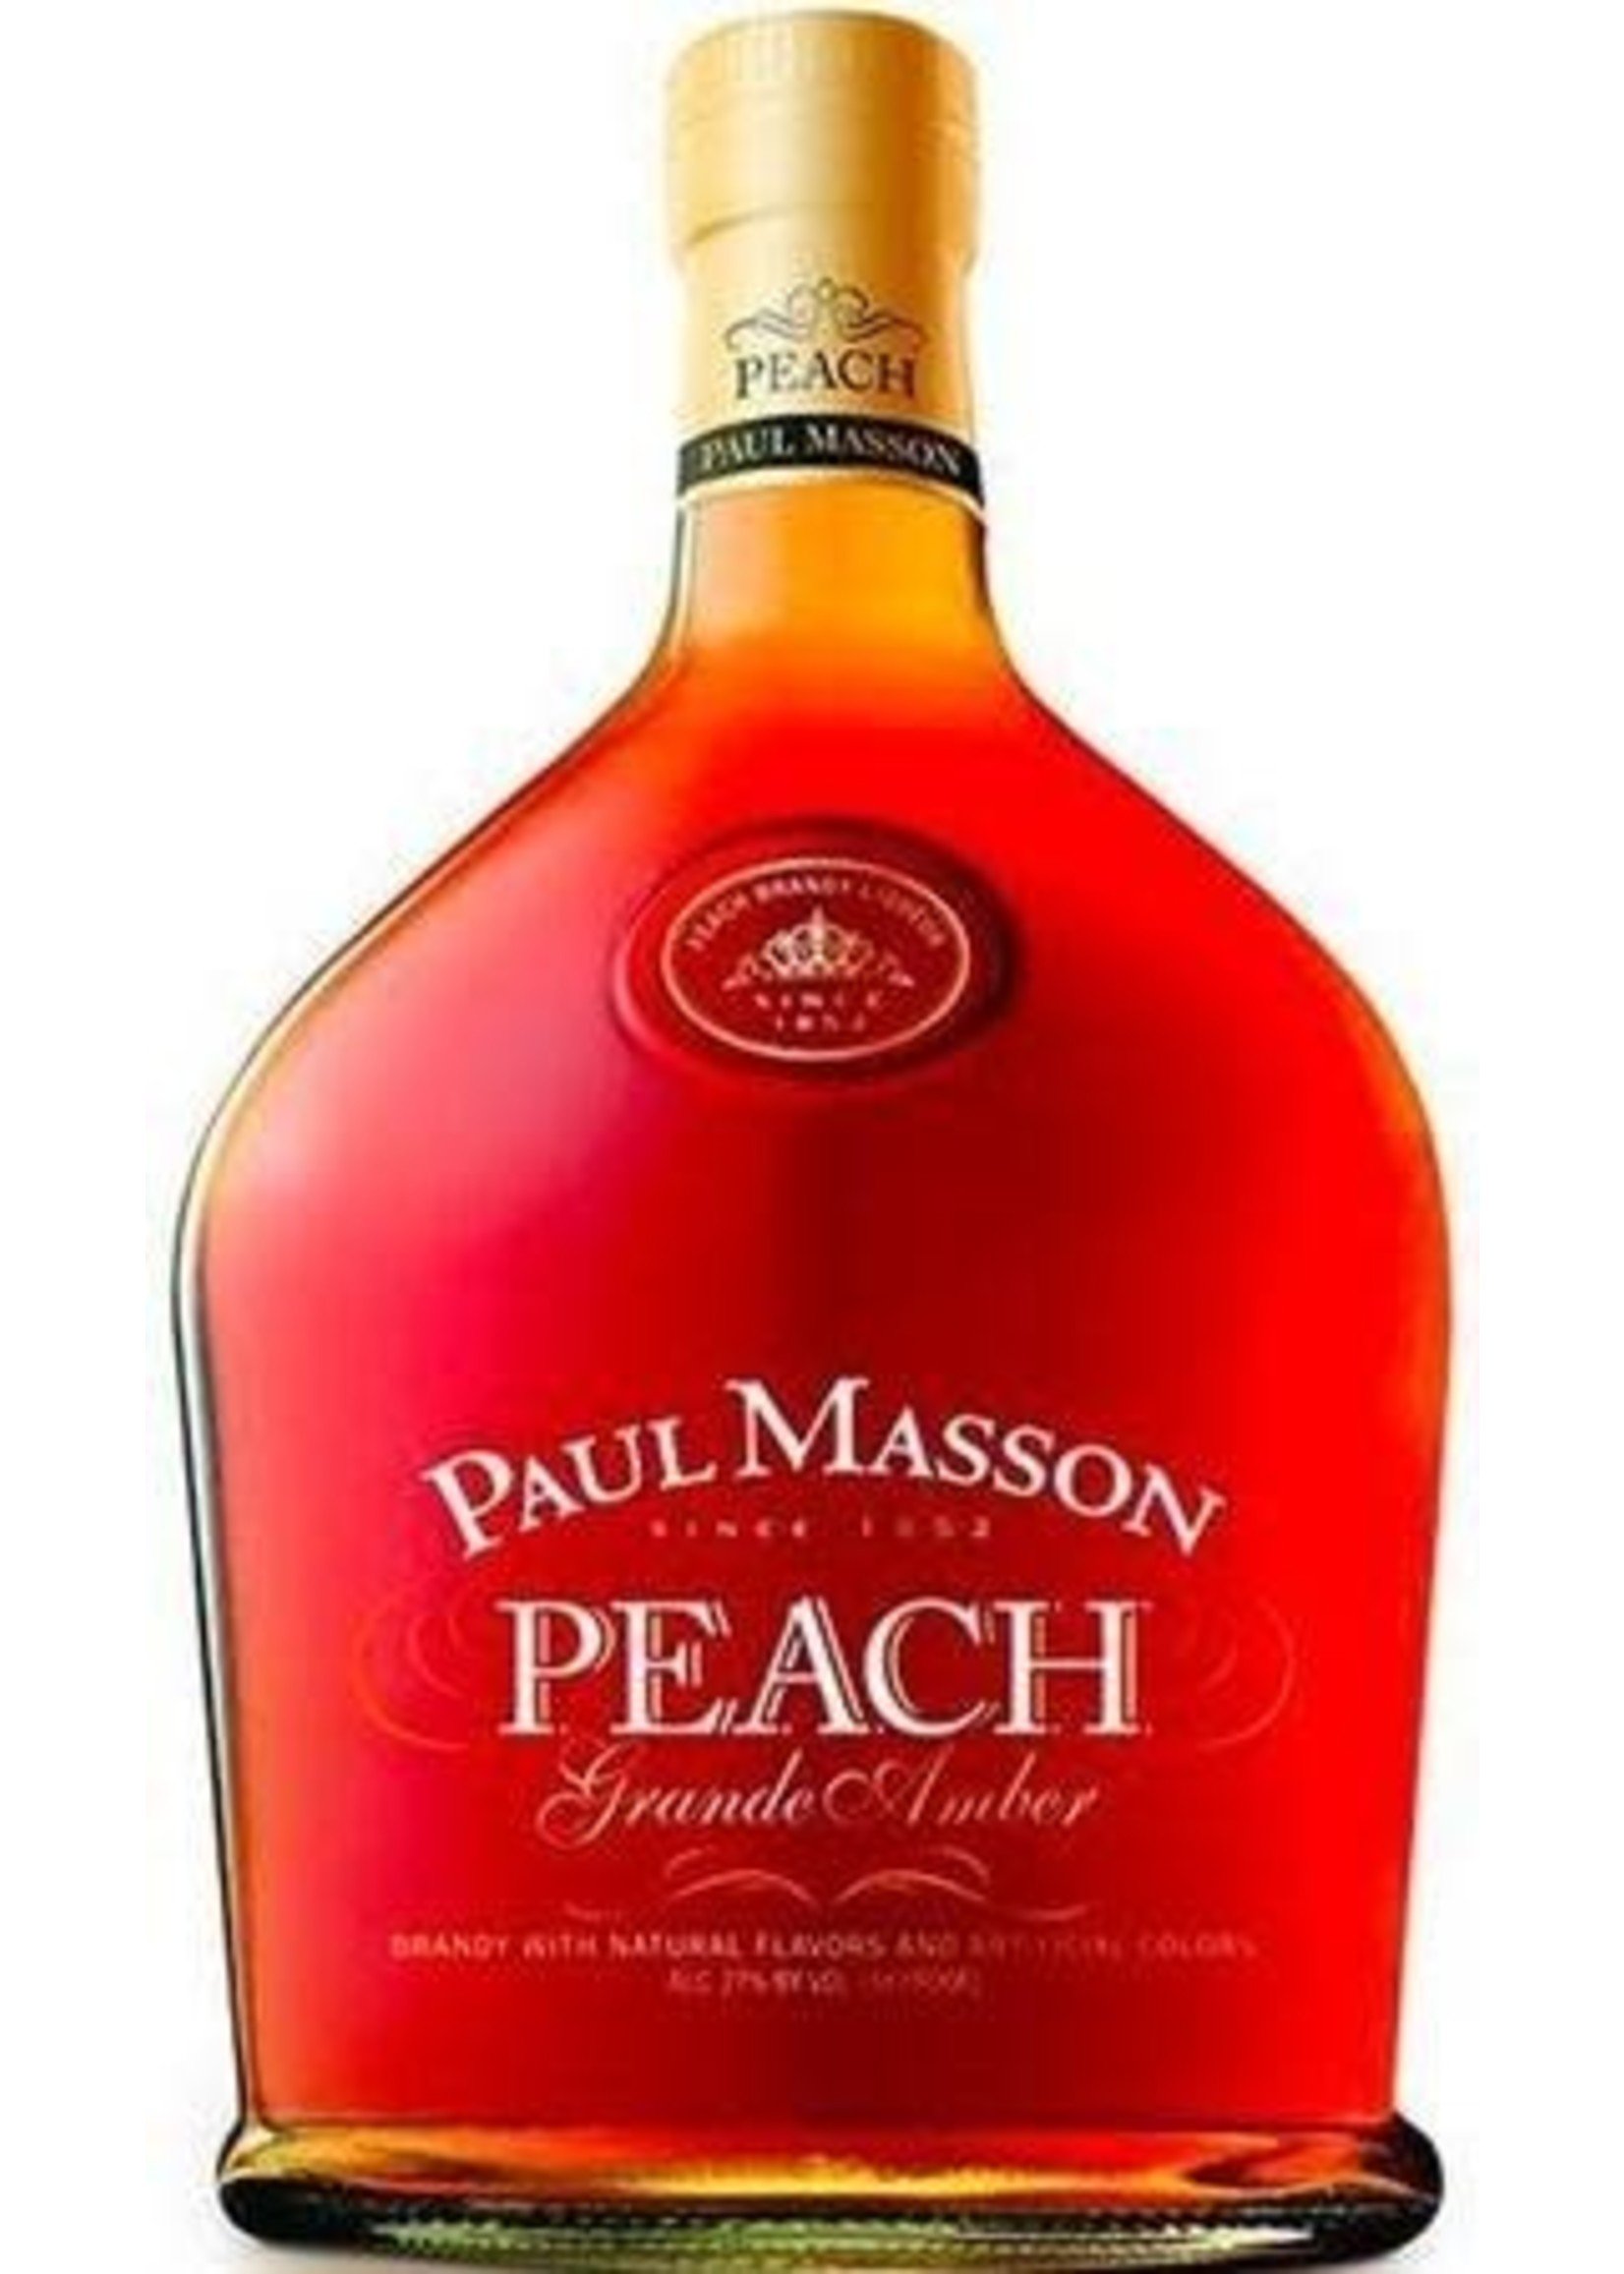 Paul Masson Paul Masson / Peach Grande Amber Brandy / 750 mL